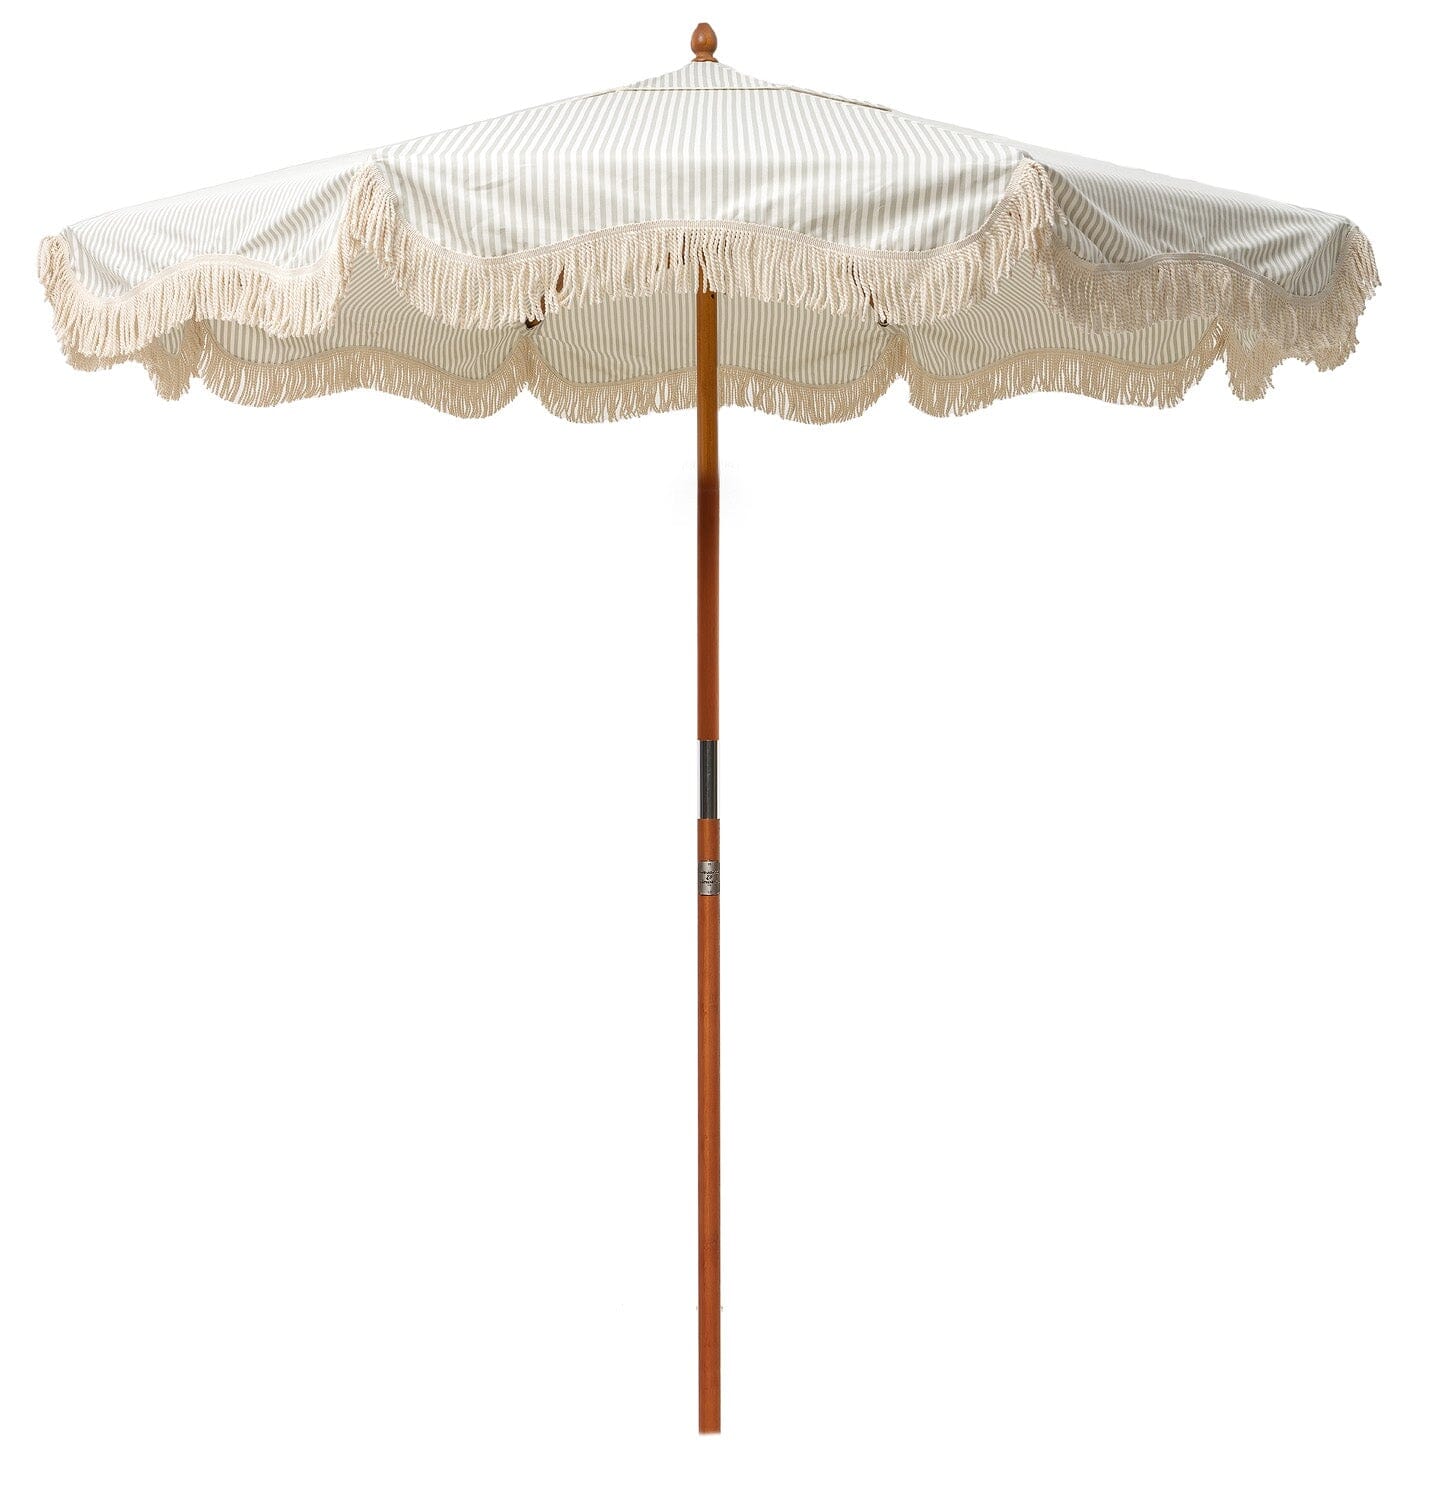 The Market Umbrella - Lauren's Sage Stripe